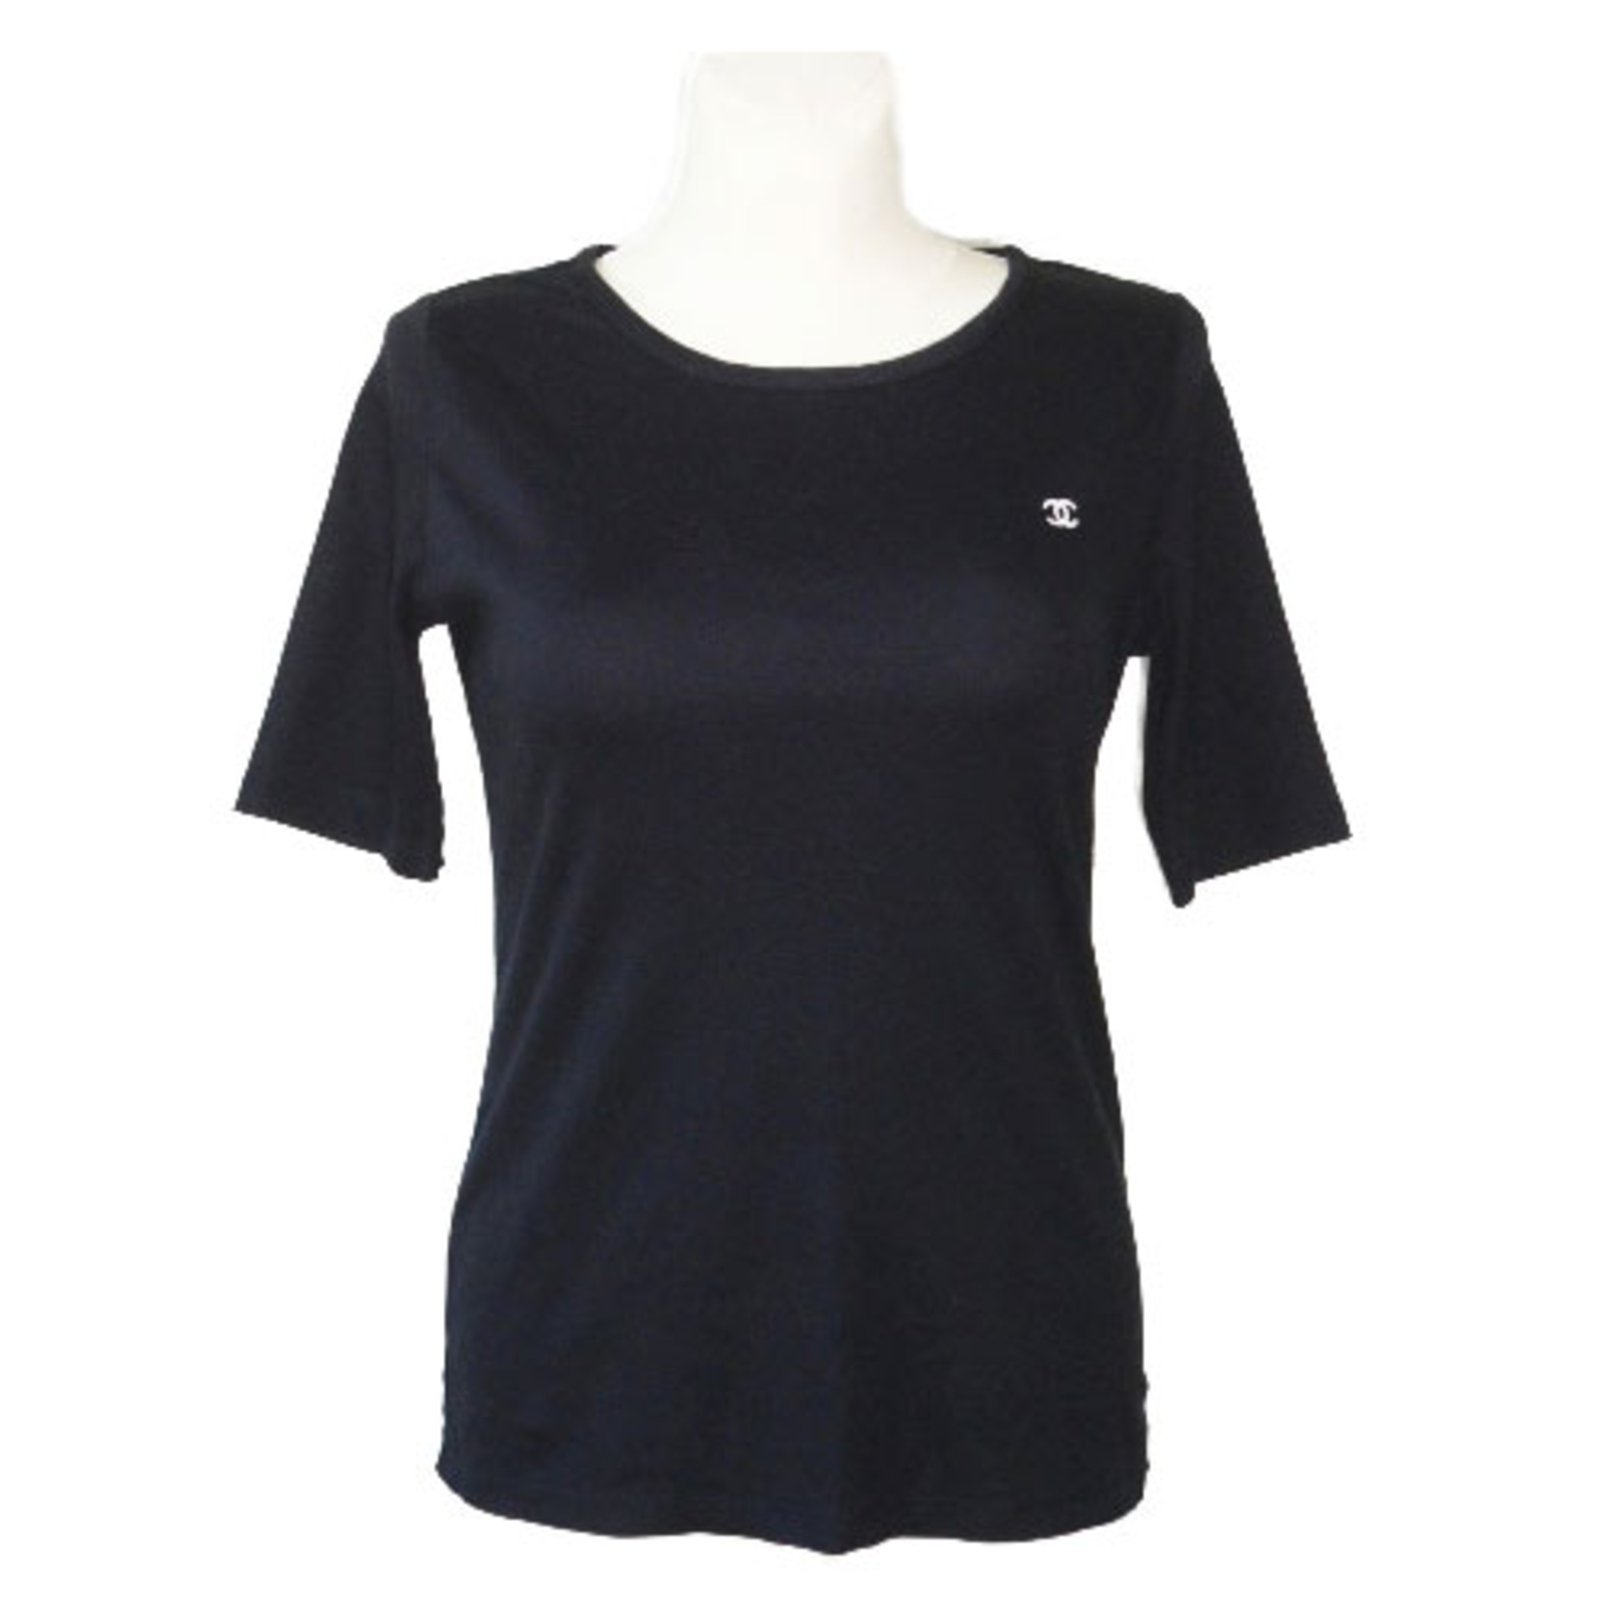 Chanel 2021 Graphic Print T-Shirt - Black Tops, Clothing - CHA743333